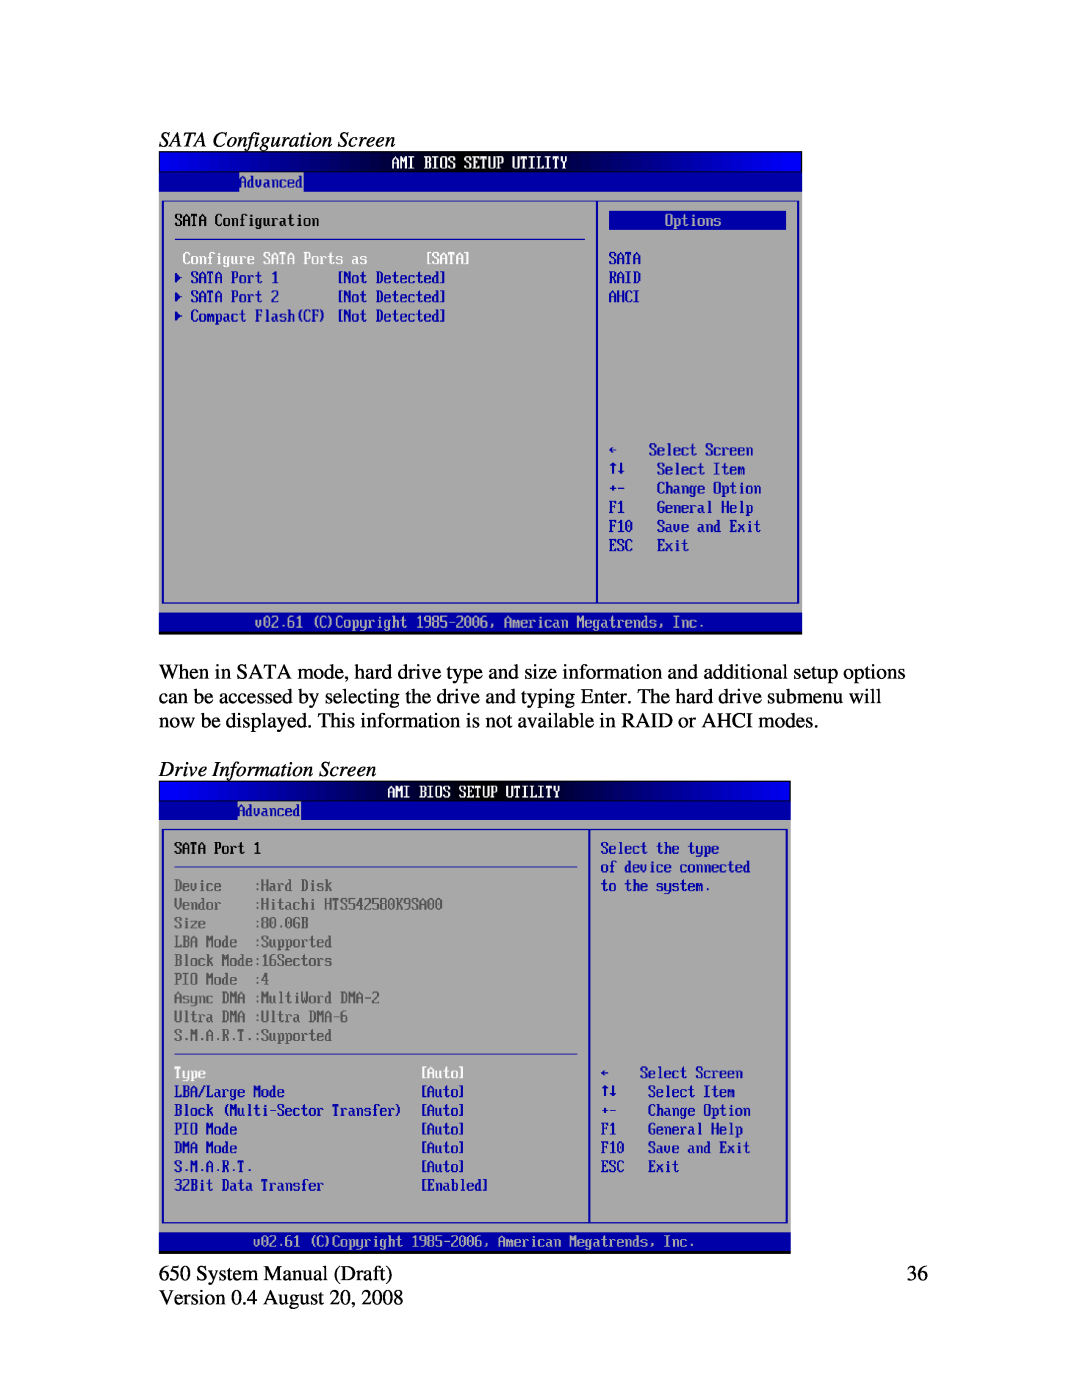 Intel J2 650 system manual SATA Configuration Screen, Drive Information Screen, System Manual Draft, Version 0.4 August 20 